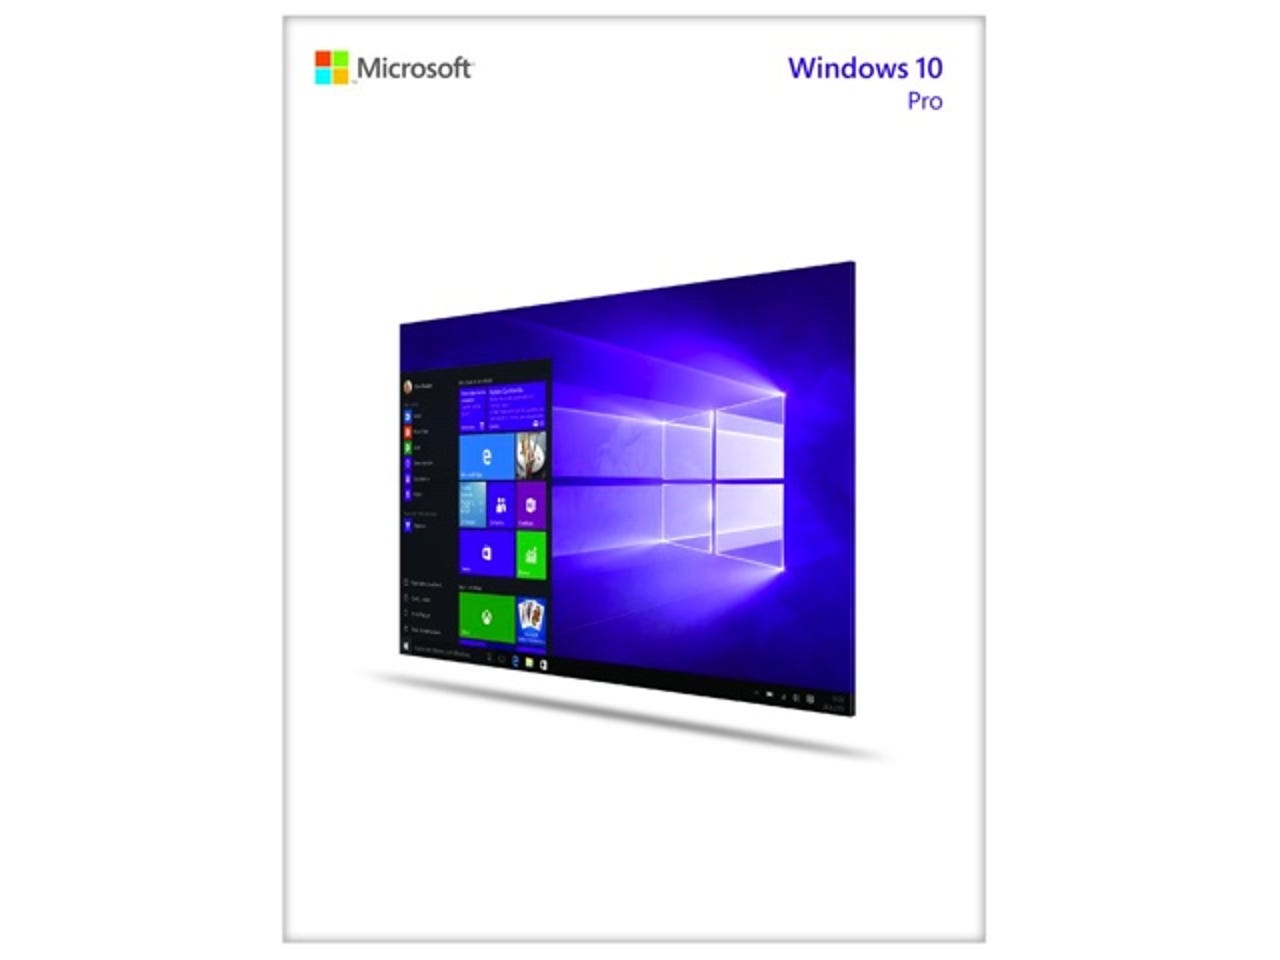 Operating system: Windows 10 Pro